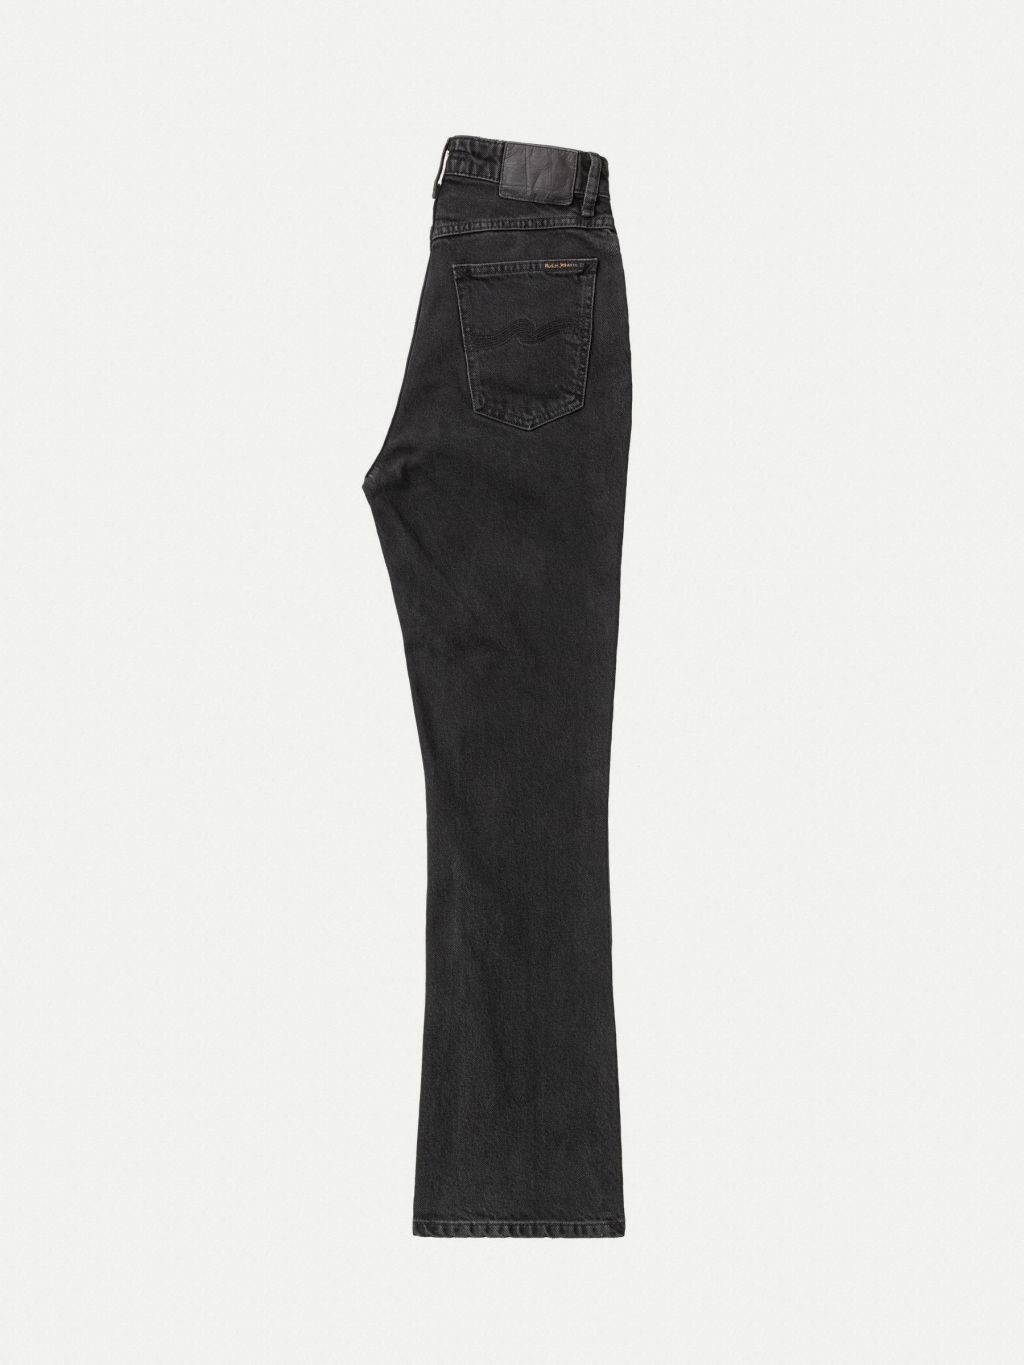 Rowdy Ruth High Waist Jeans - Almost Black 29/28